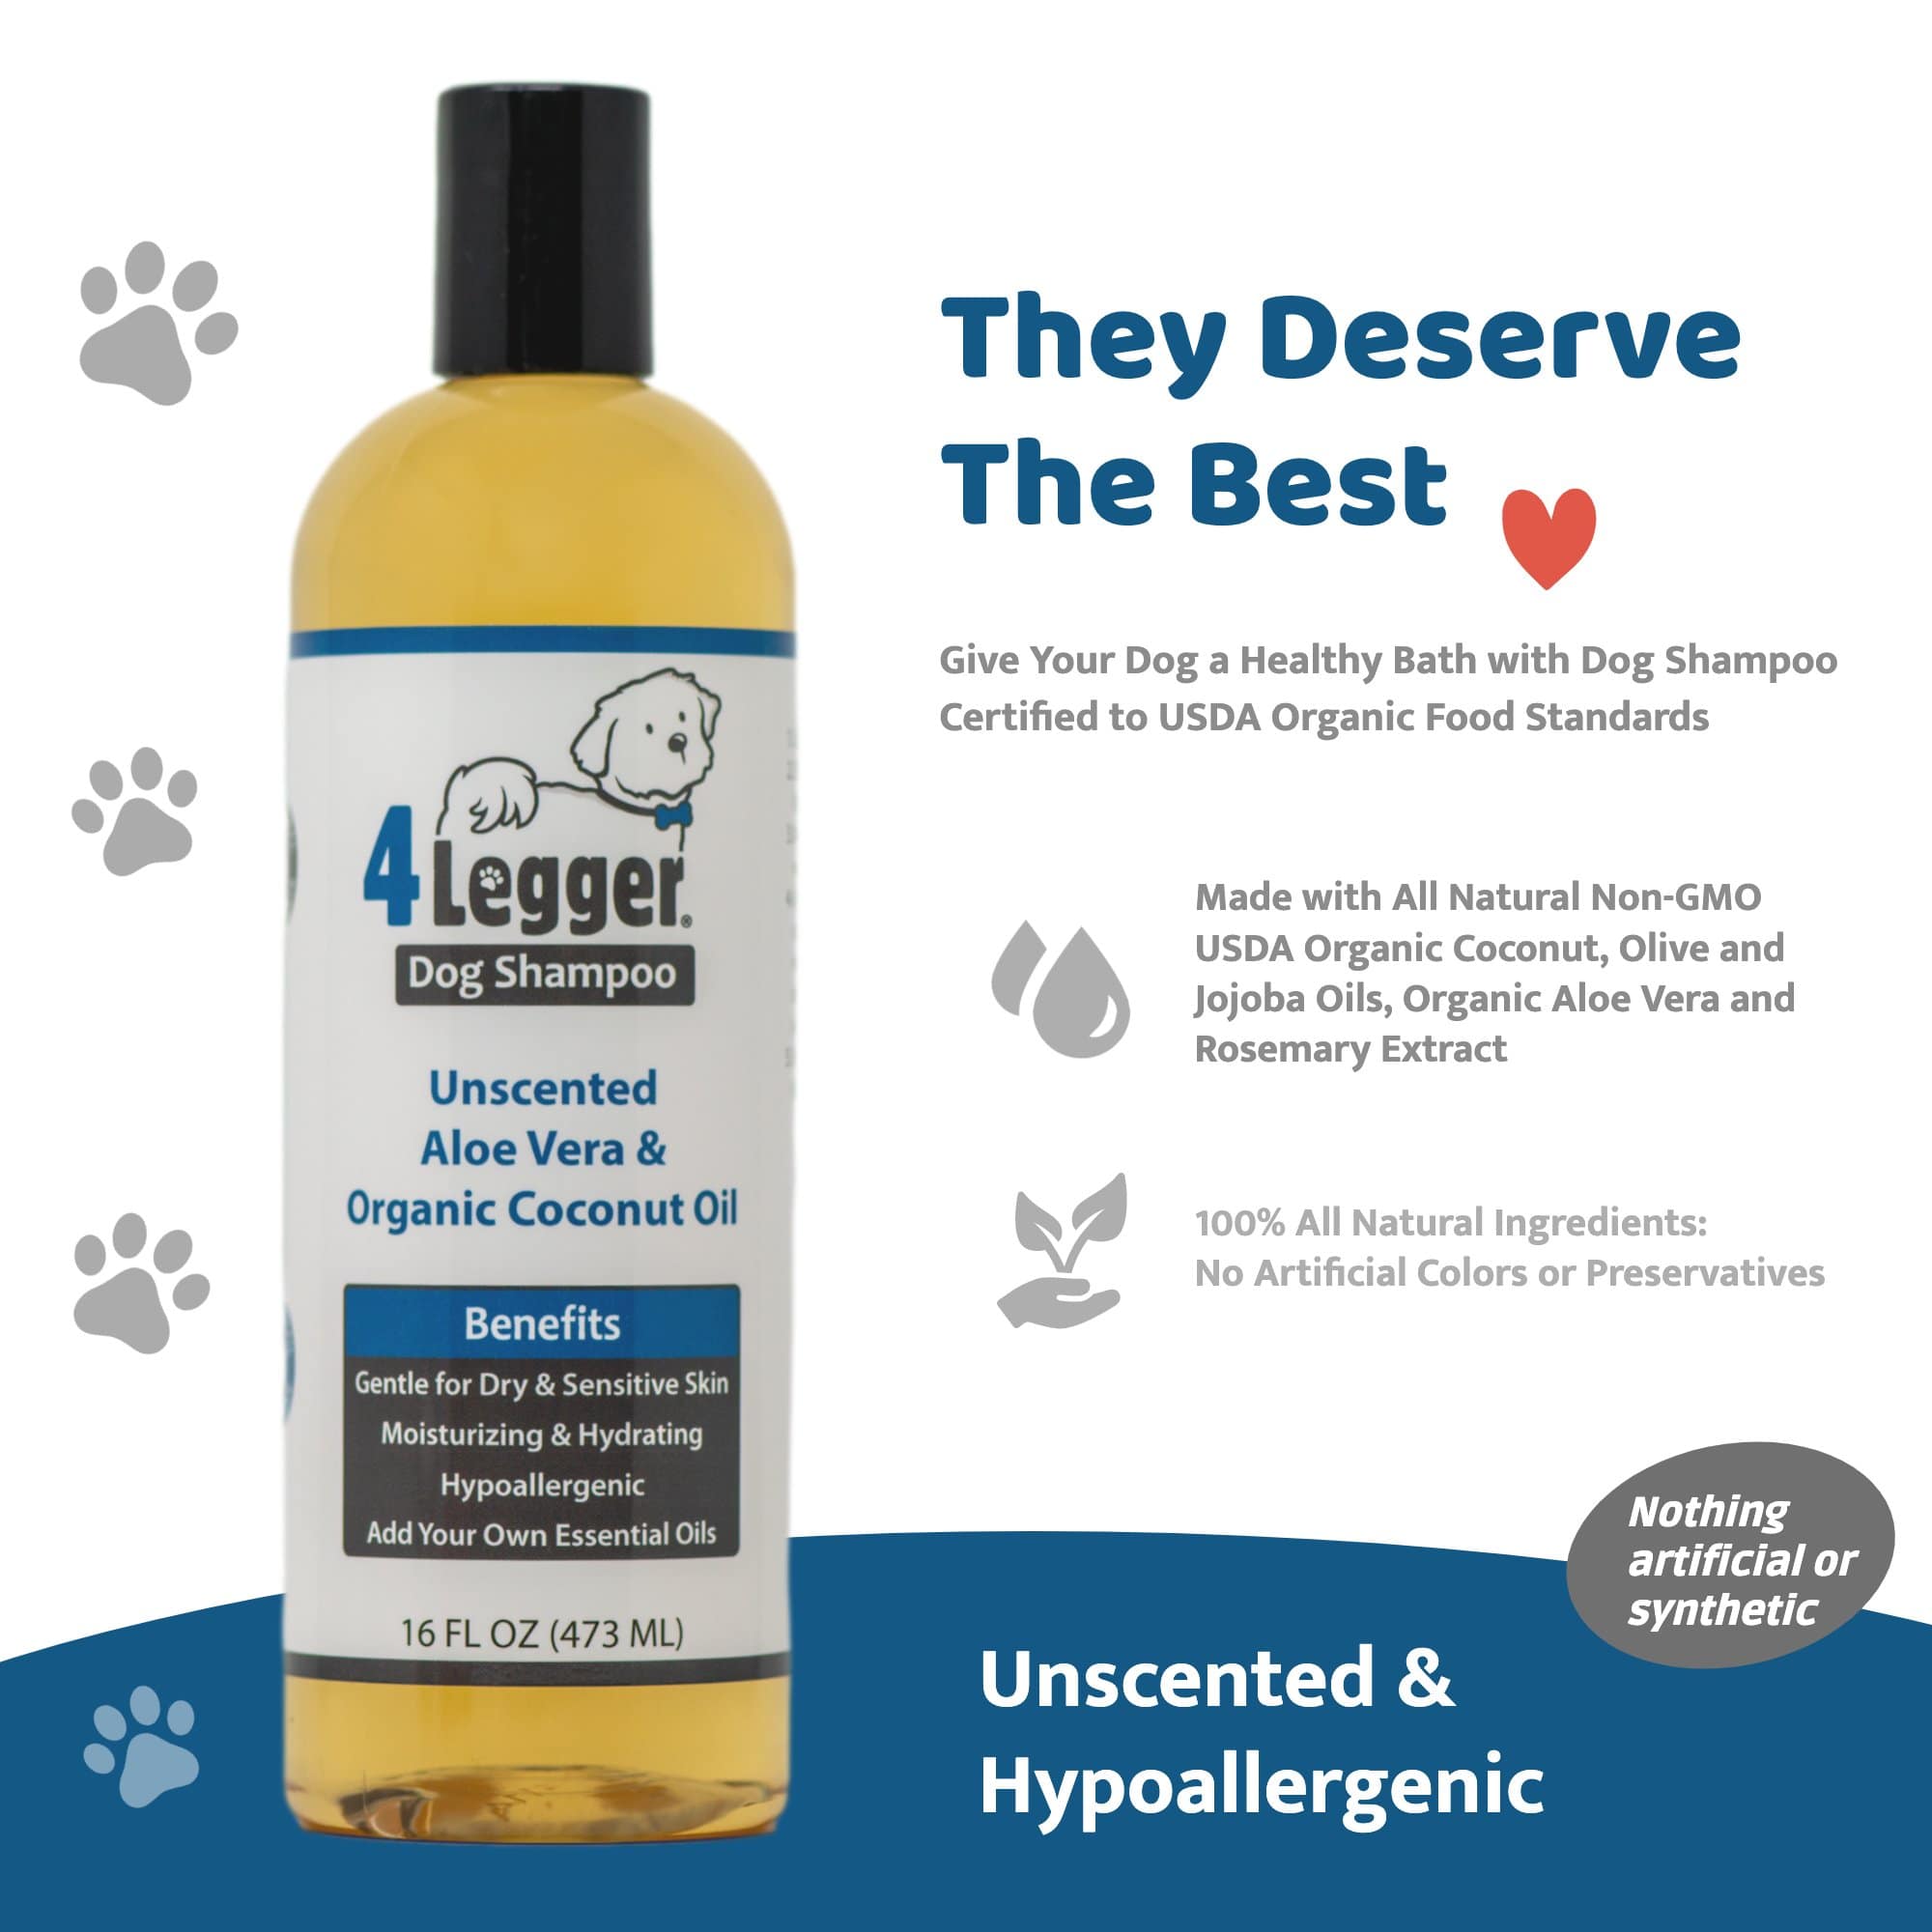 4-Legger Dog Shampoo with for Sensitive Skin